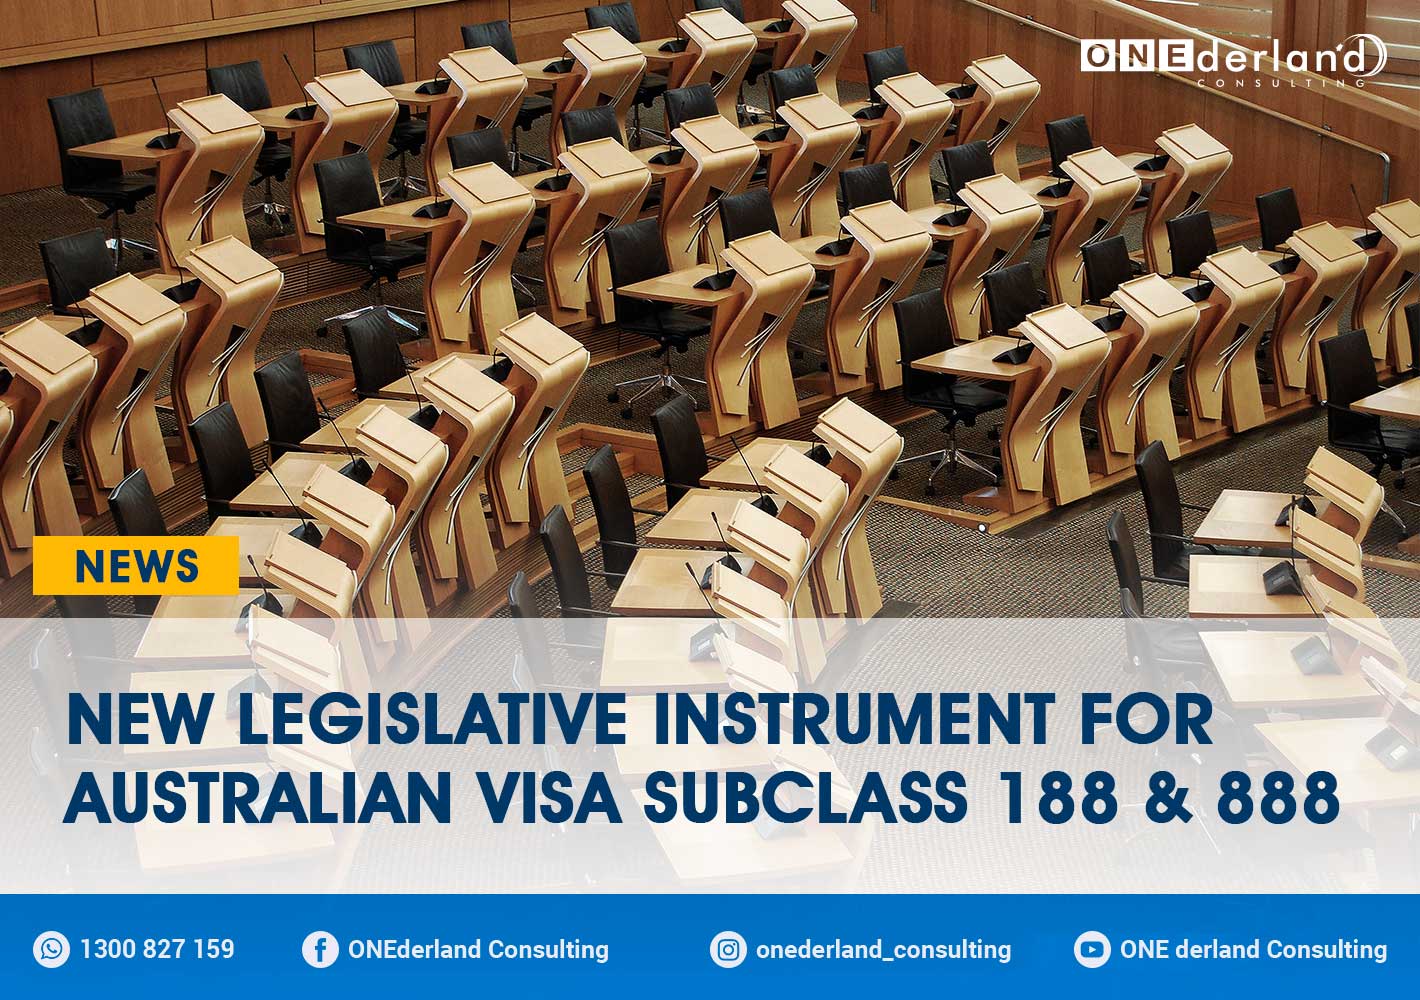 New Legislative Instrument for Australian Visa Subclass 188 & 888